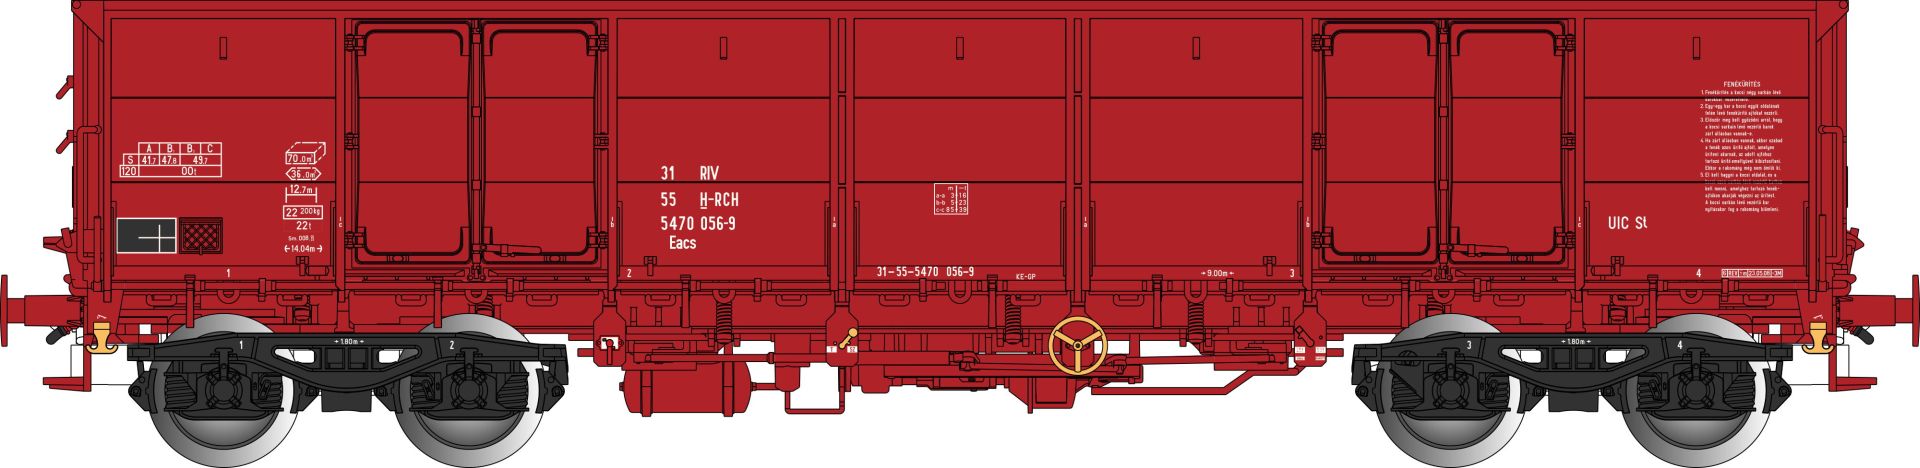 Albert Modell 547002 - Offener Güterwagen Eacs, H-RCH, Ep.VI